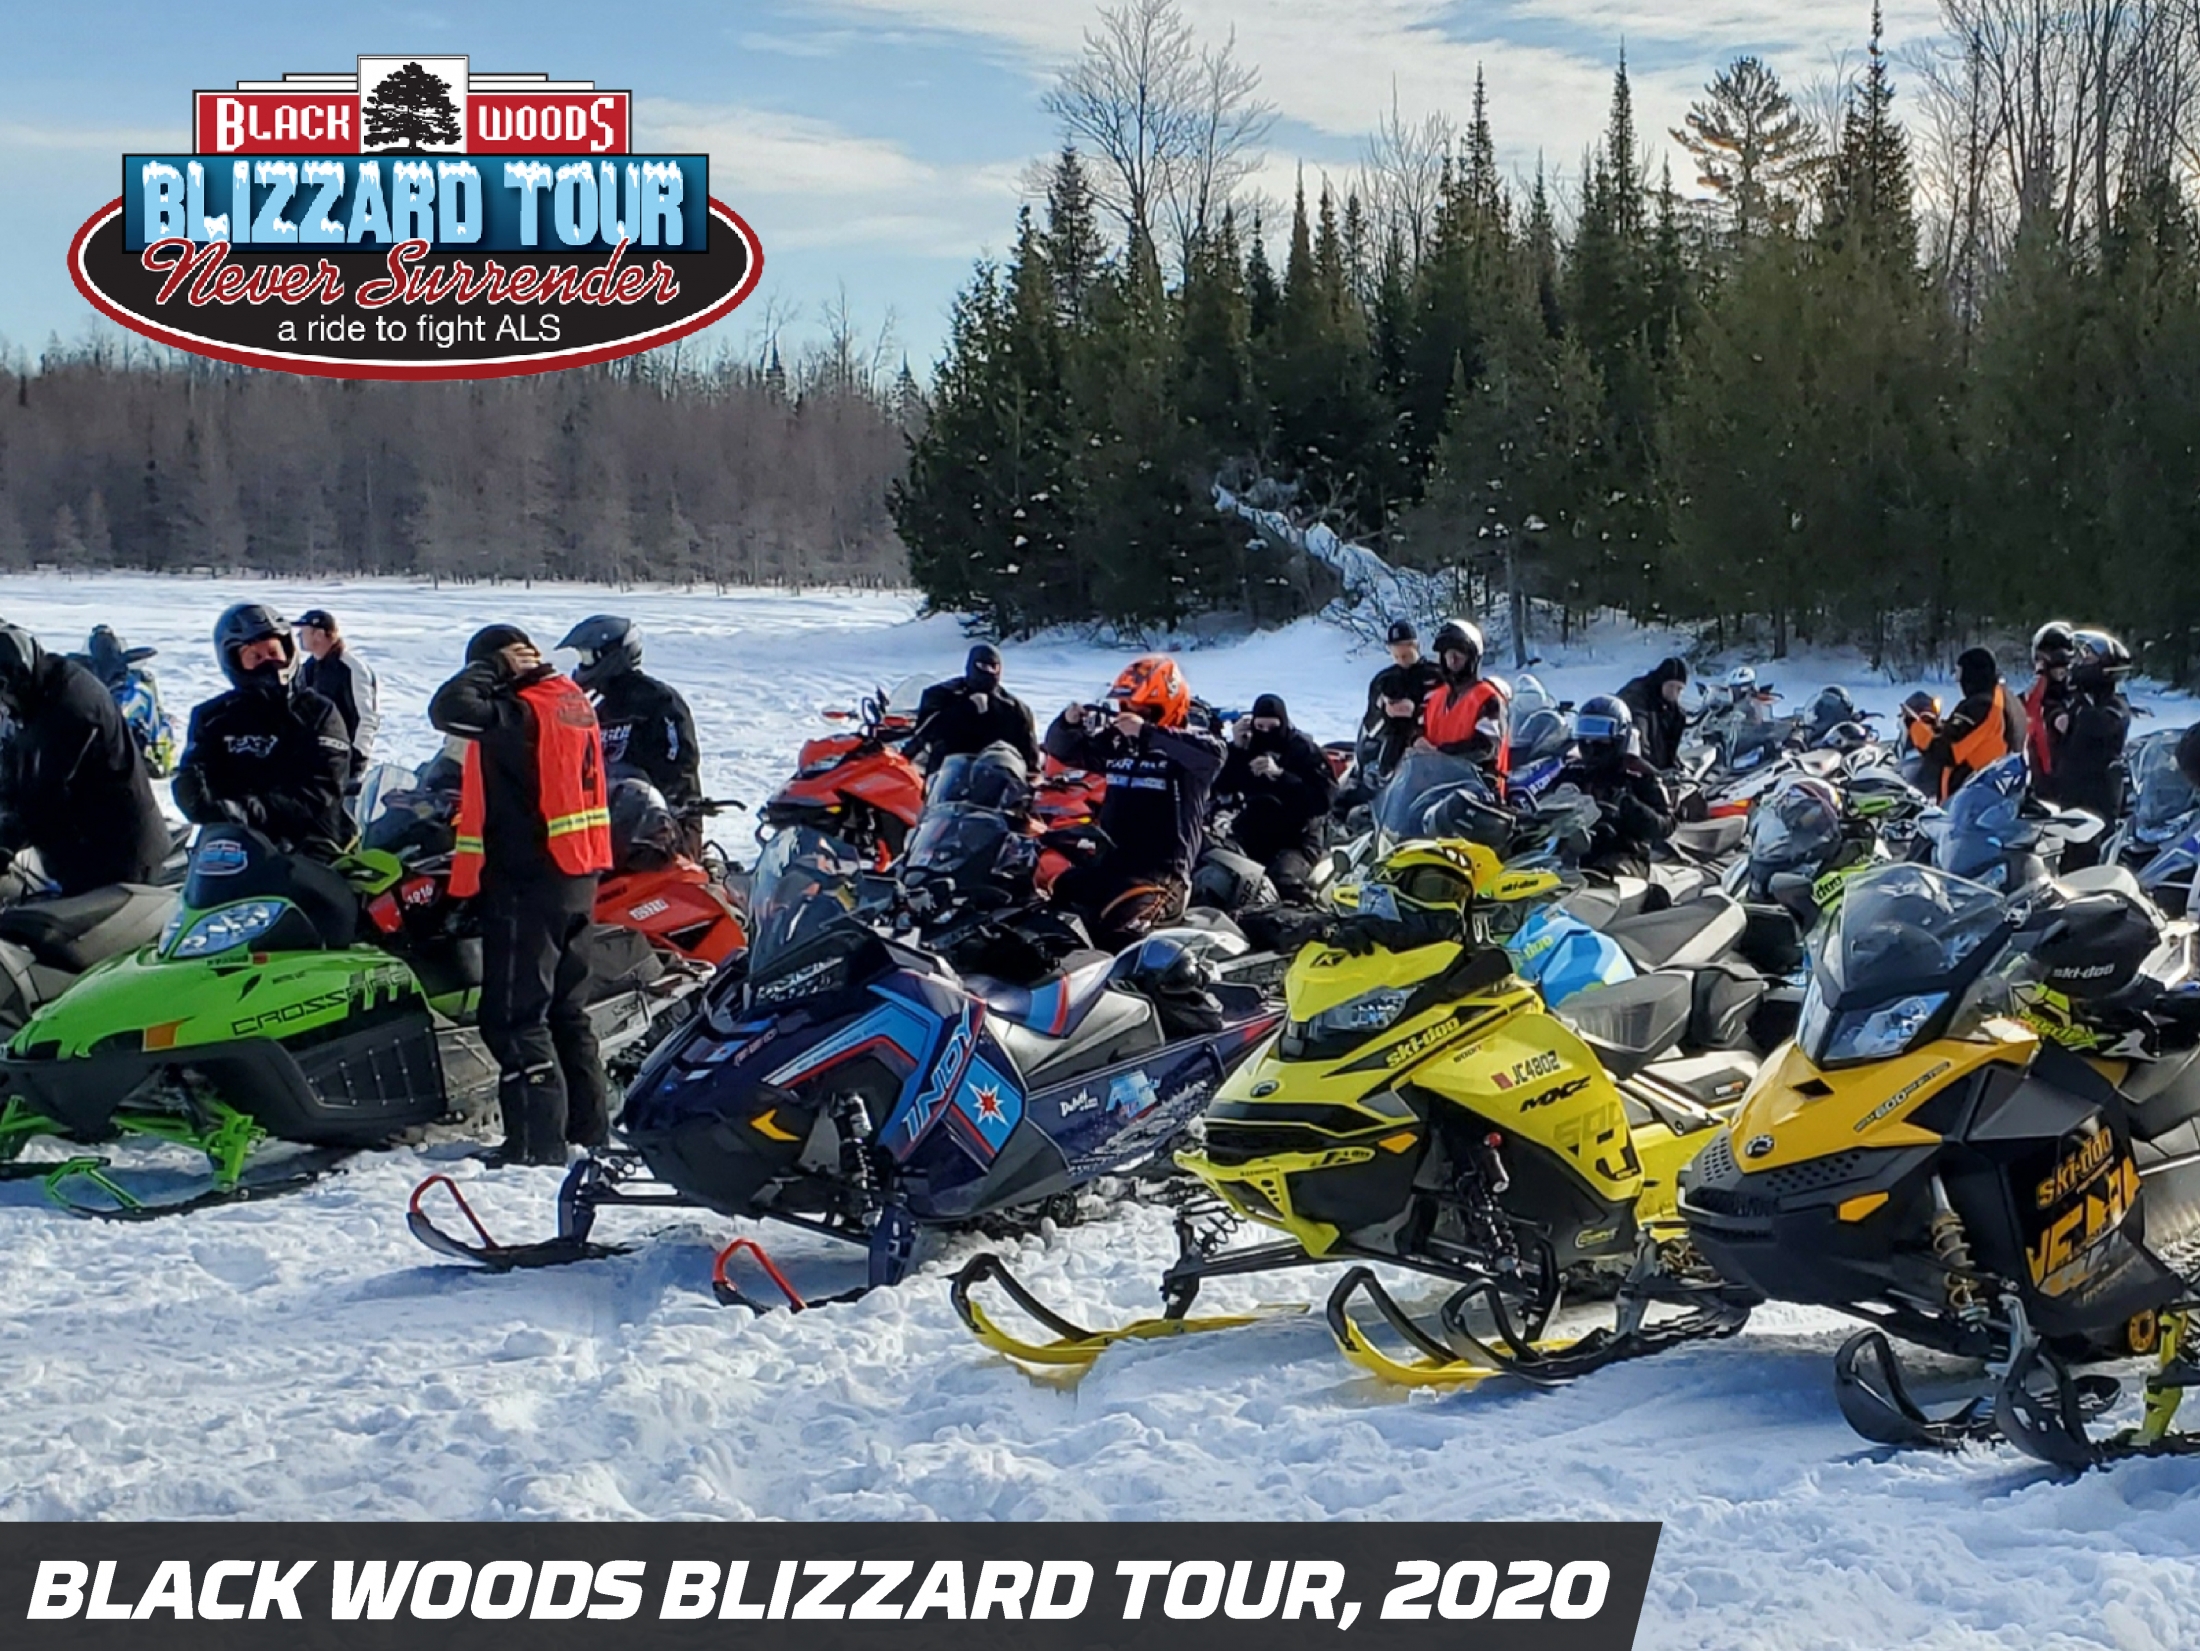 Precision Pipeline Involvement: Blackwoods Blizzard Tour, 2020